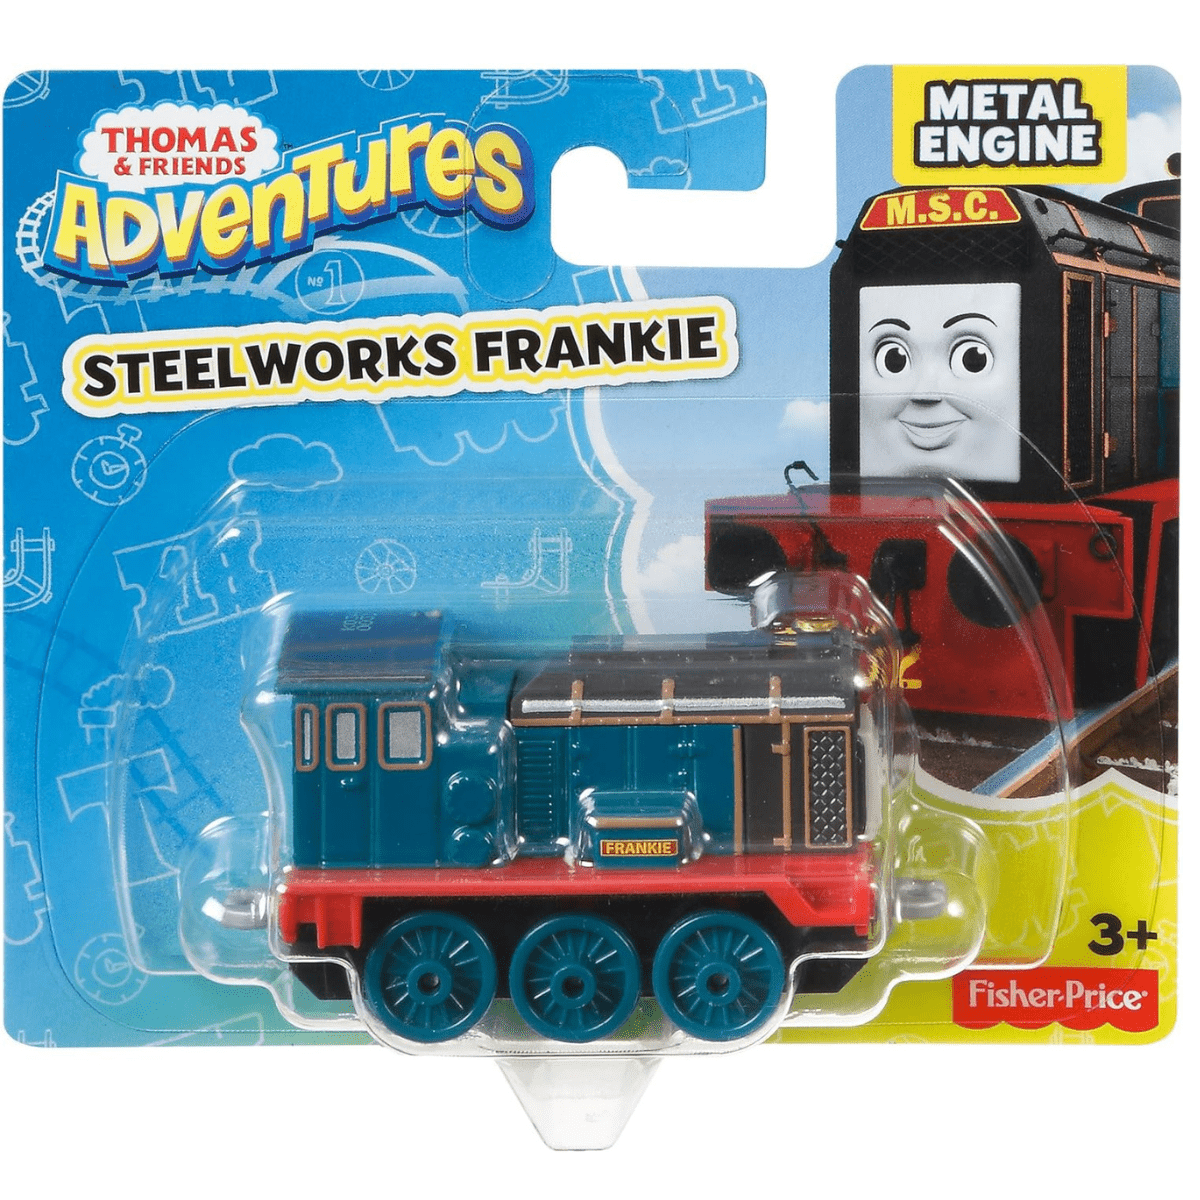 Thomas & Friends Adventures - Frankie